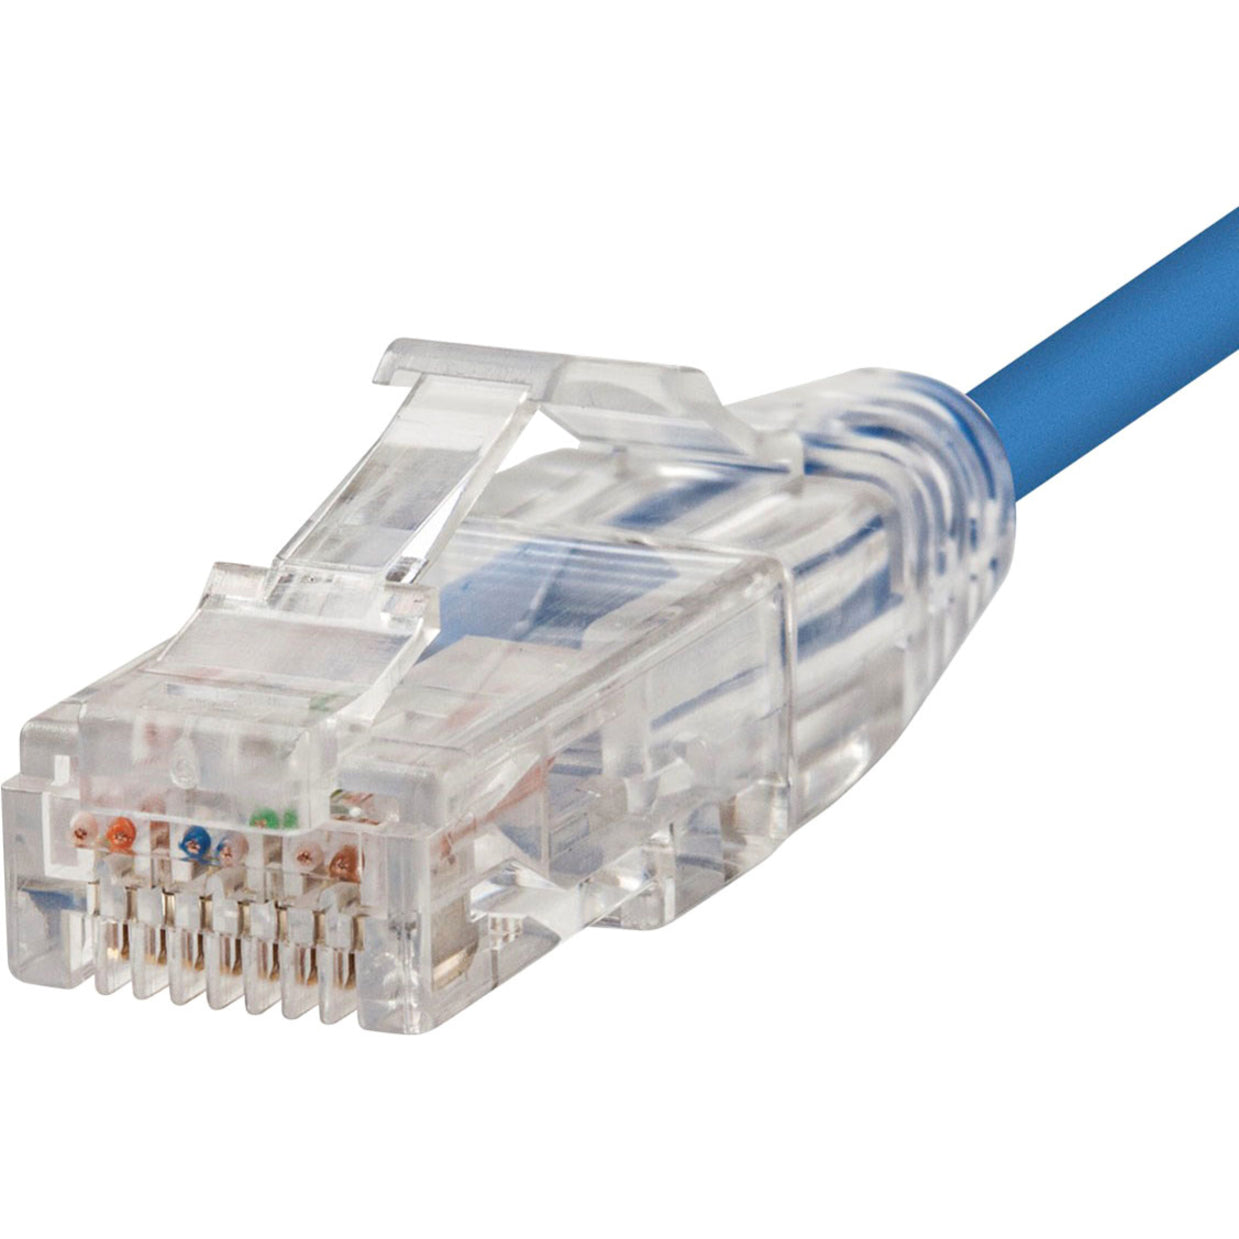 Monoprice 13543 SlimRun Cat6 28AWG UTP Ethernet Network Cable, 10ft Blue, Flexible, Snagless